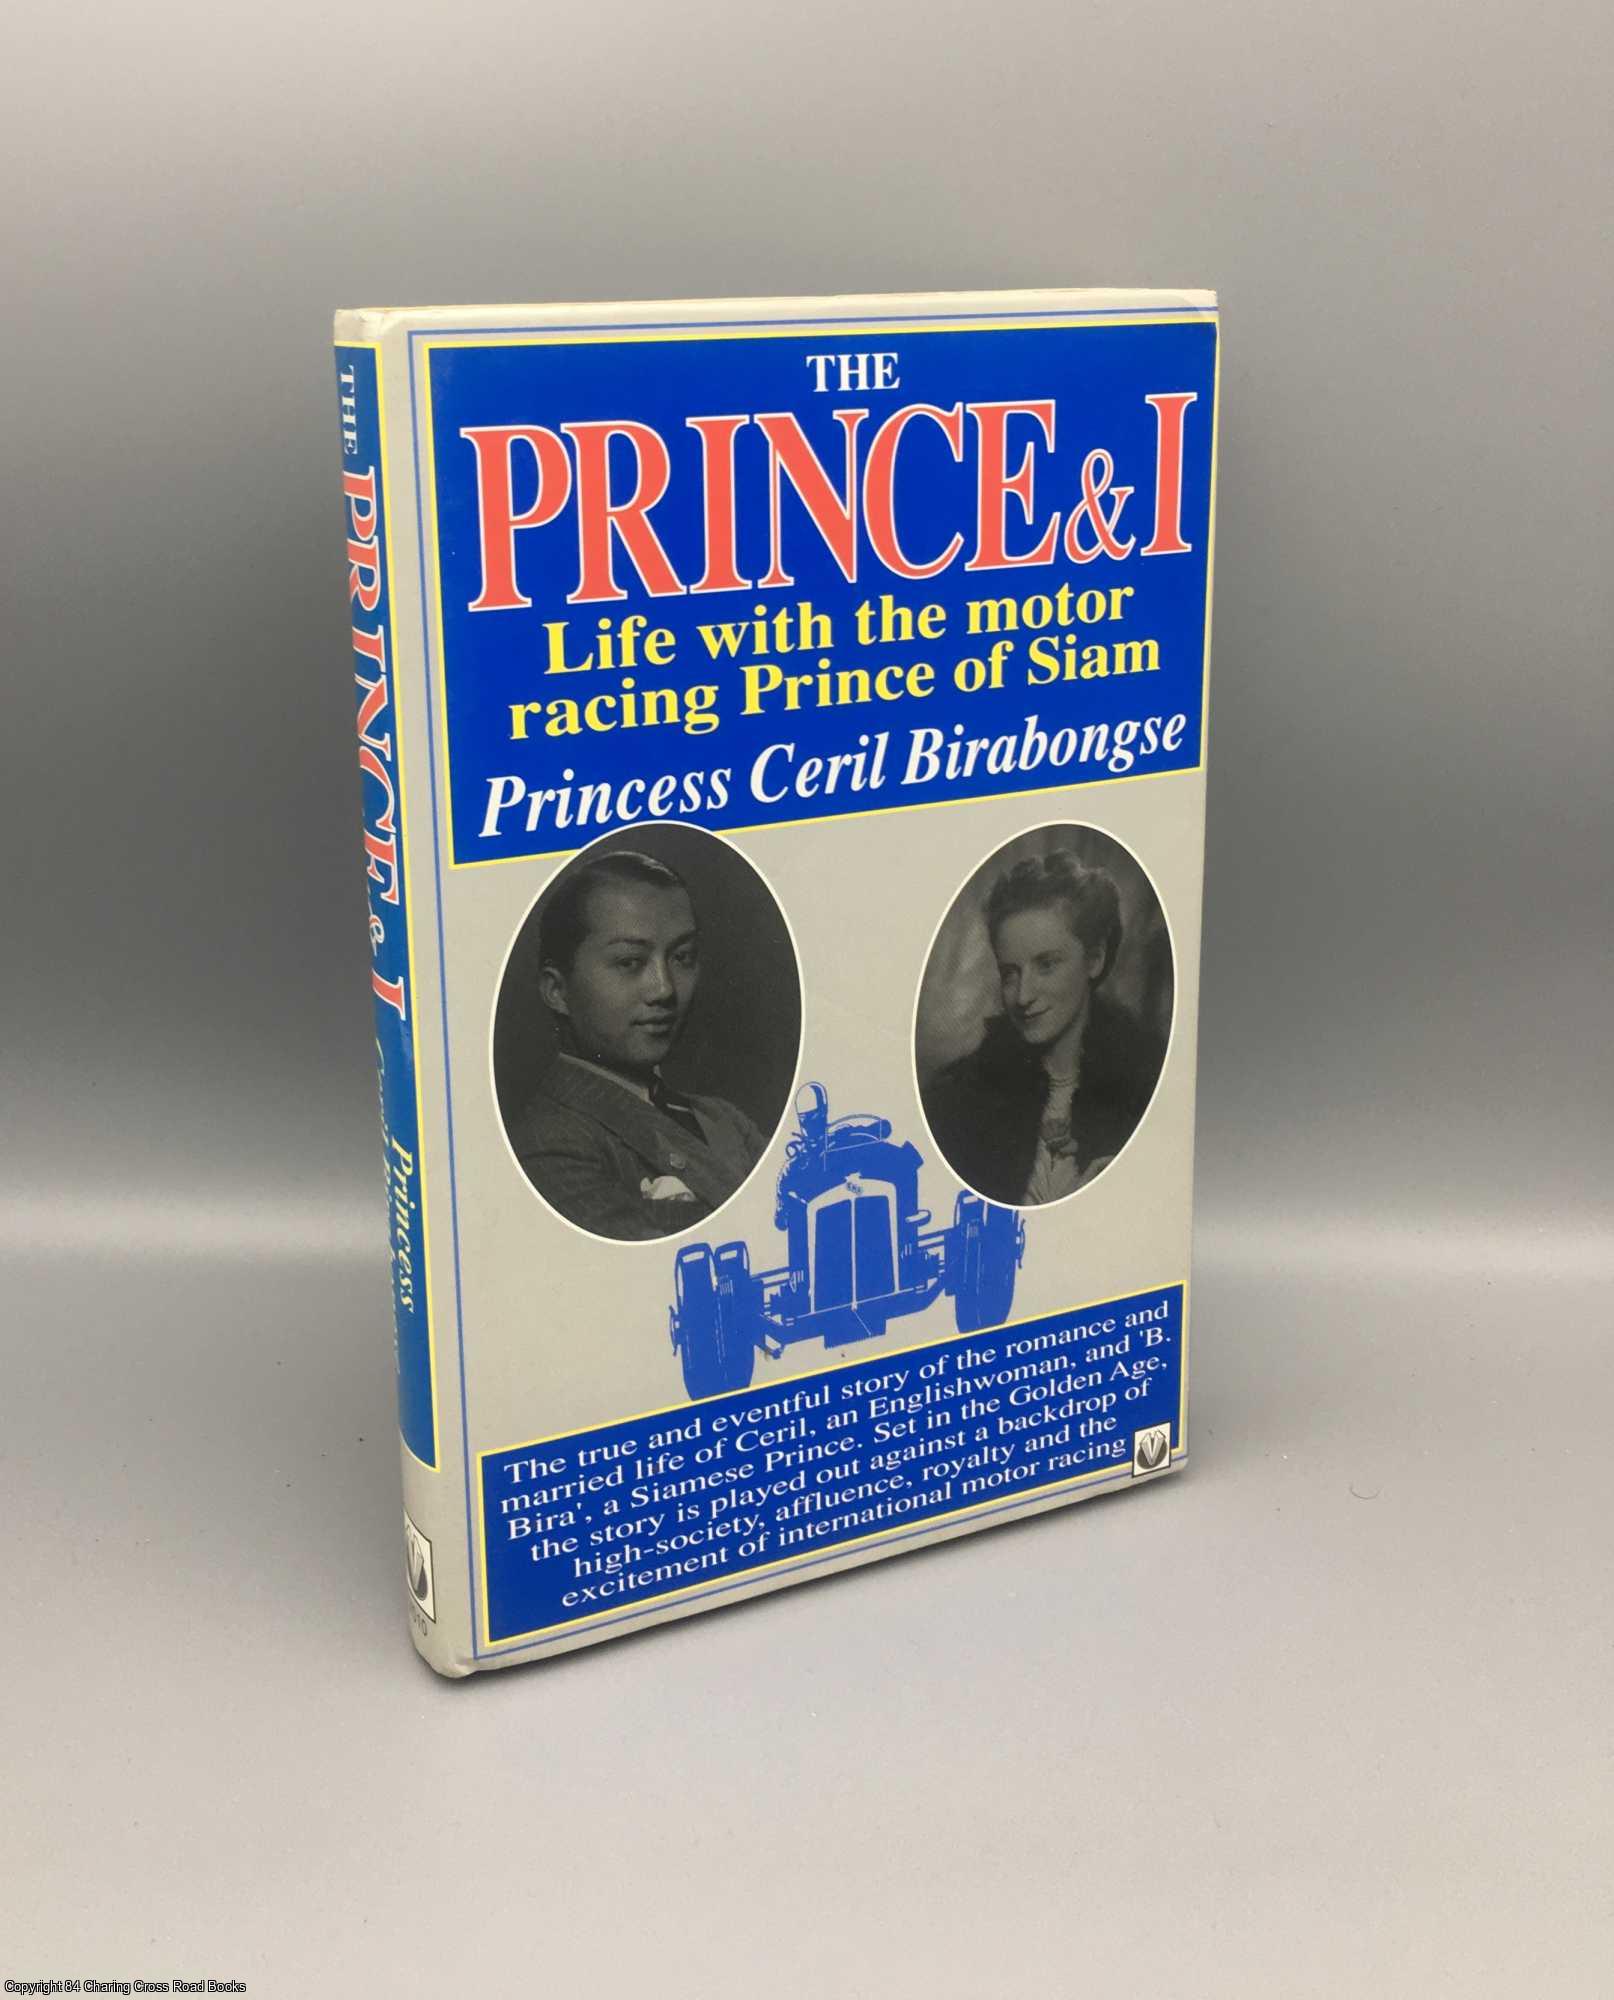 Birabongse of Thailand, Princess Ceril - The Prince and I: Life with Bira, the Motor Racing Prince of Siam